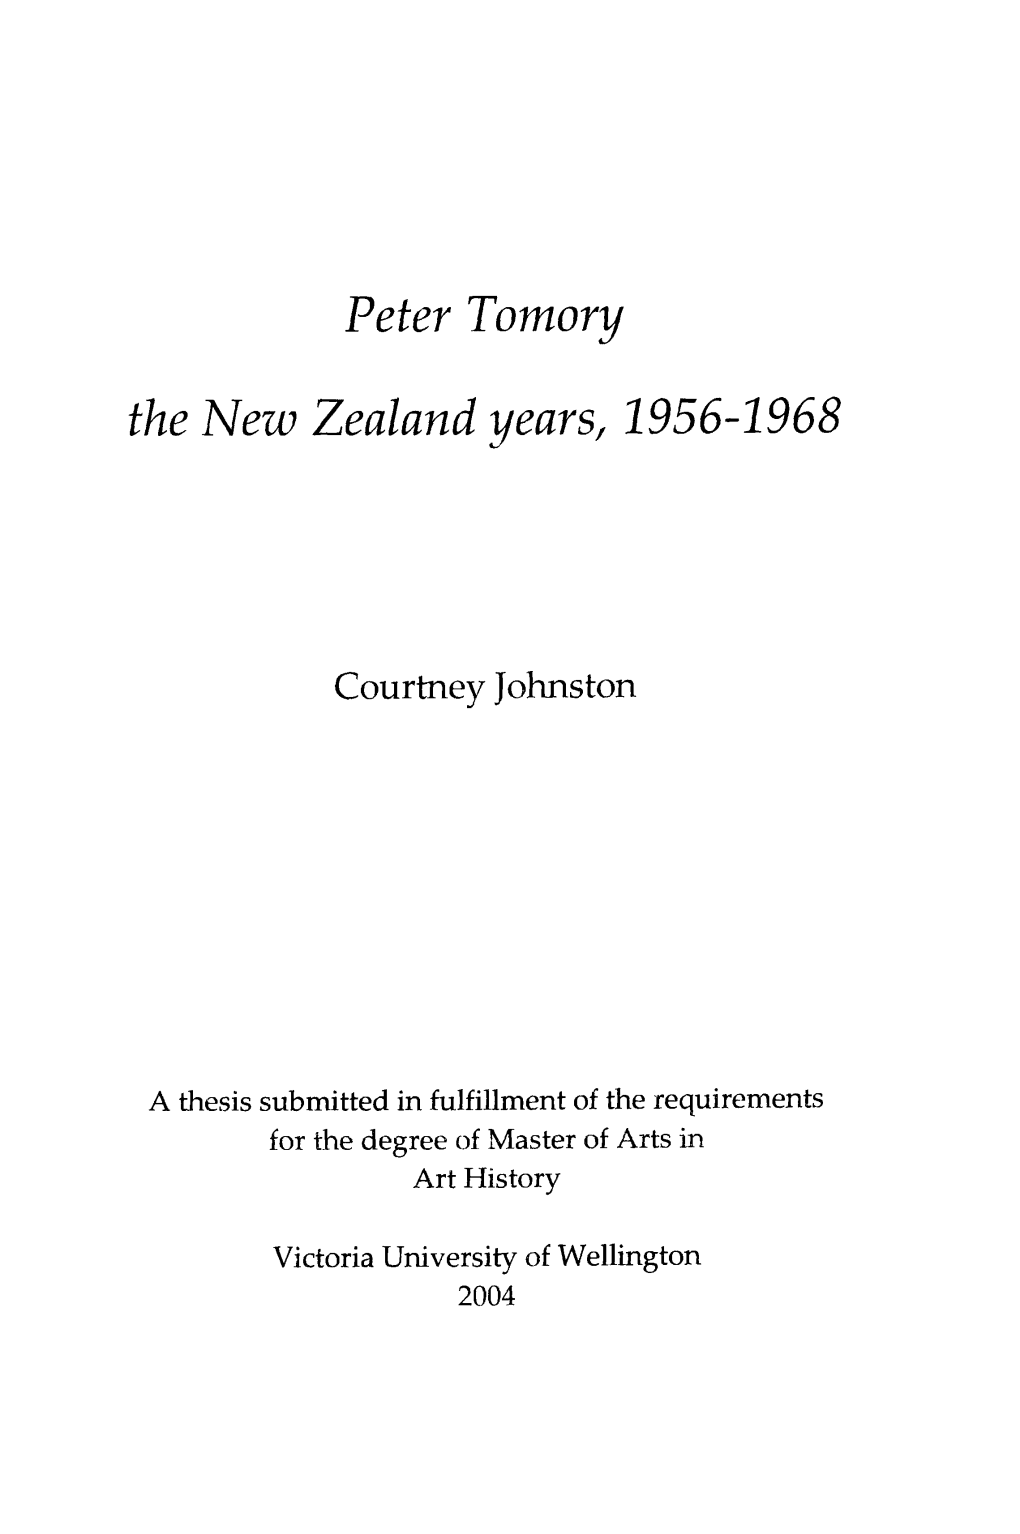 Peter Tomory the Lrjew Zealand Uearsl 1955-1968